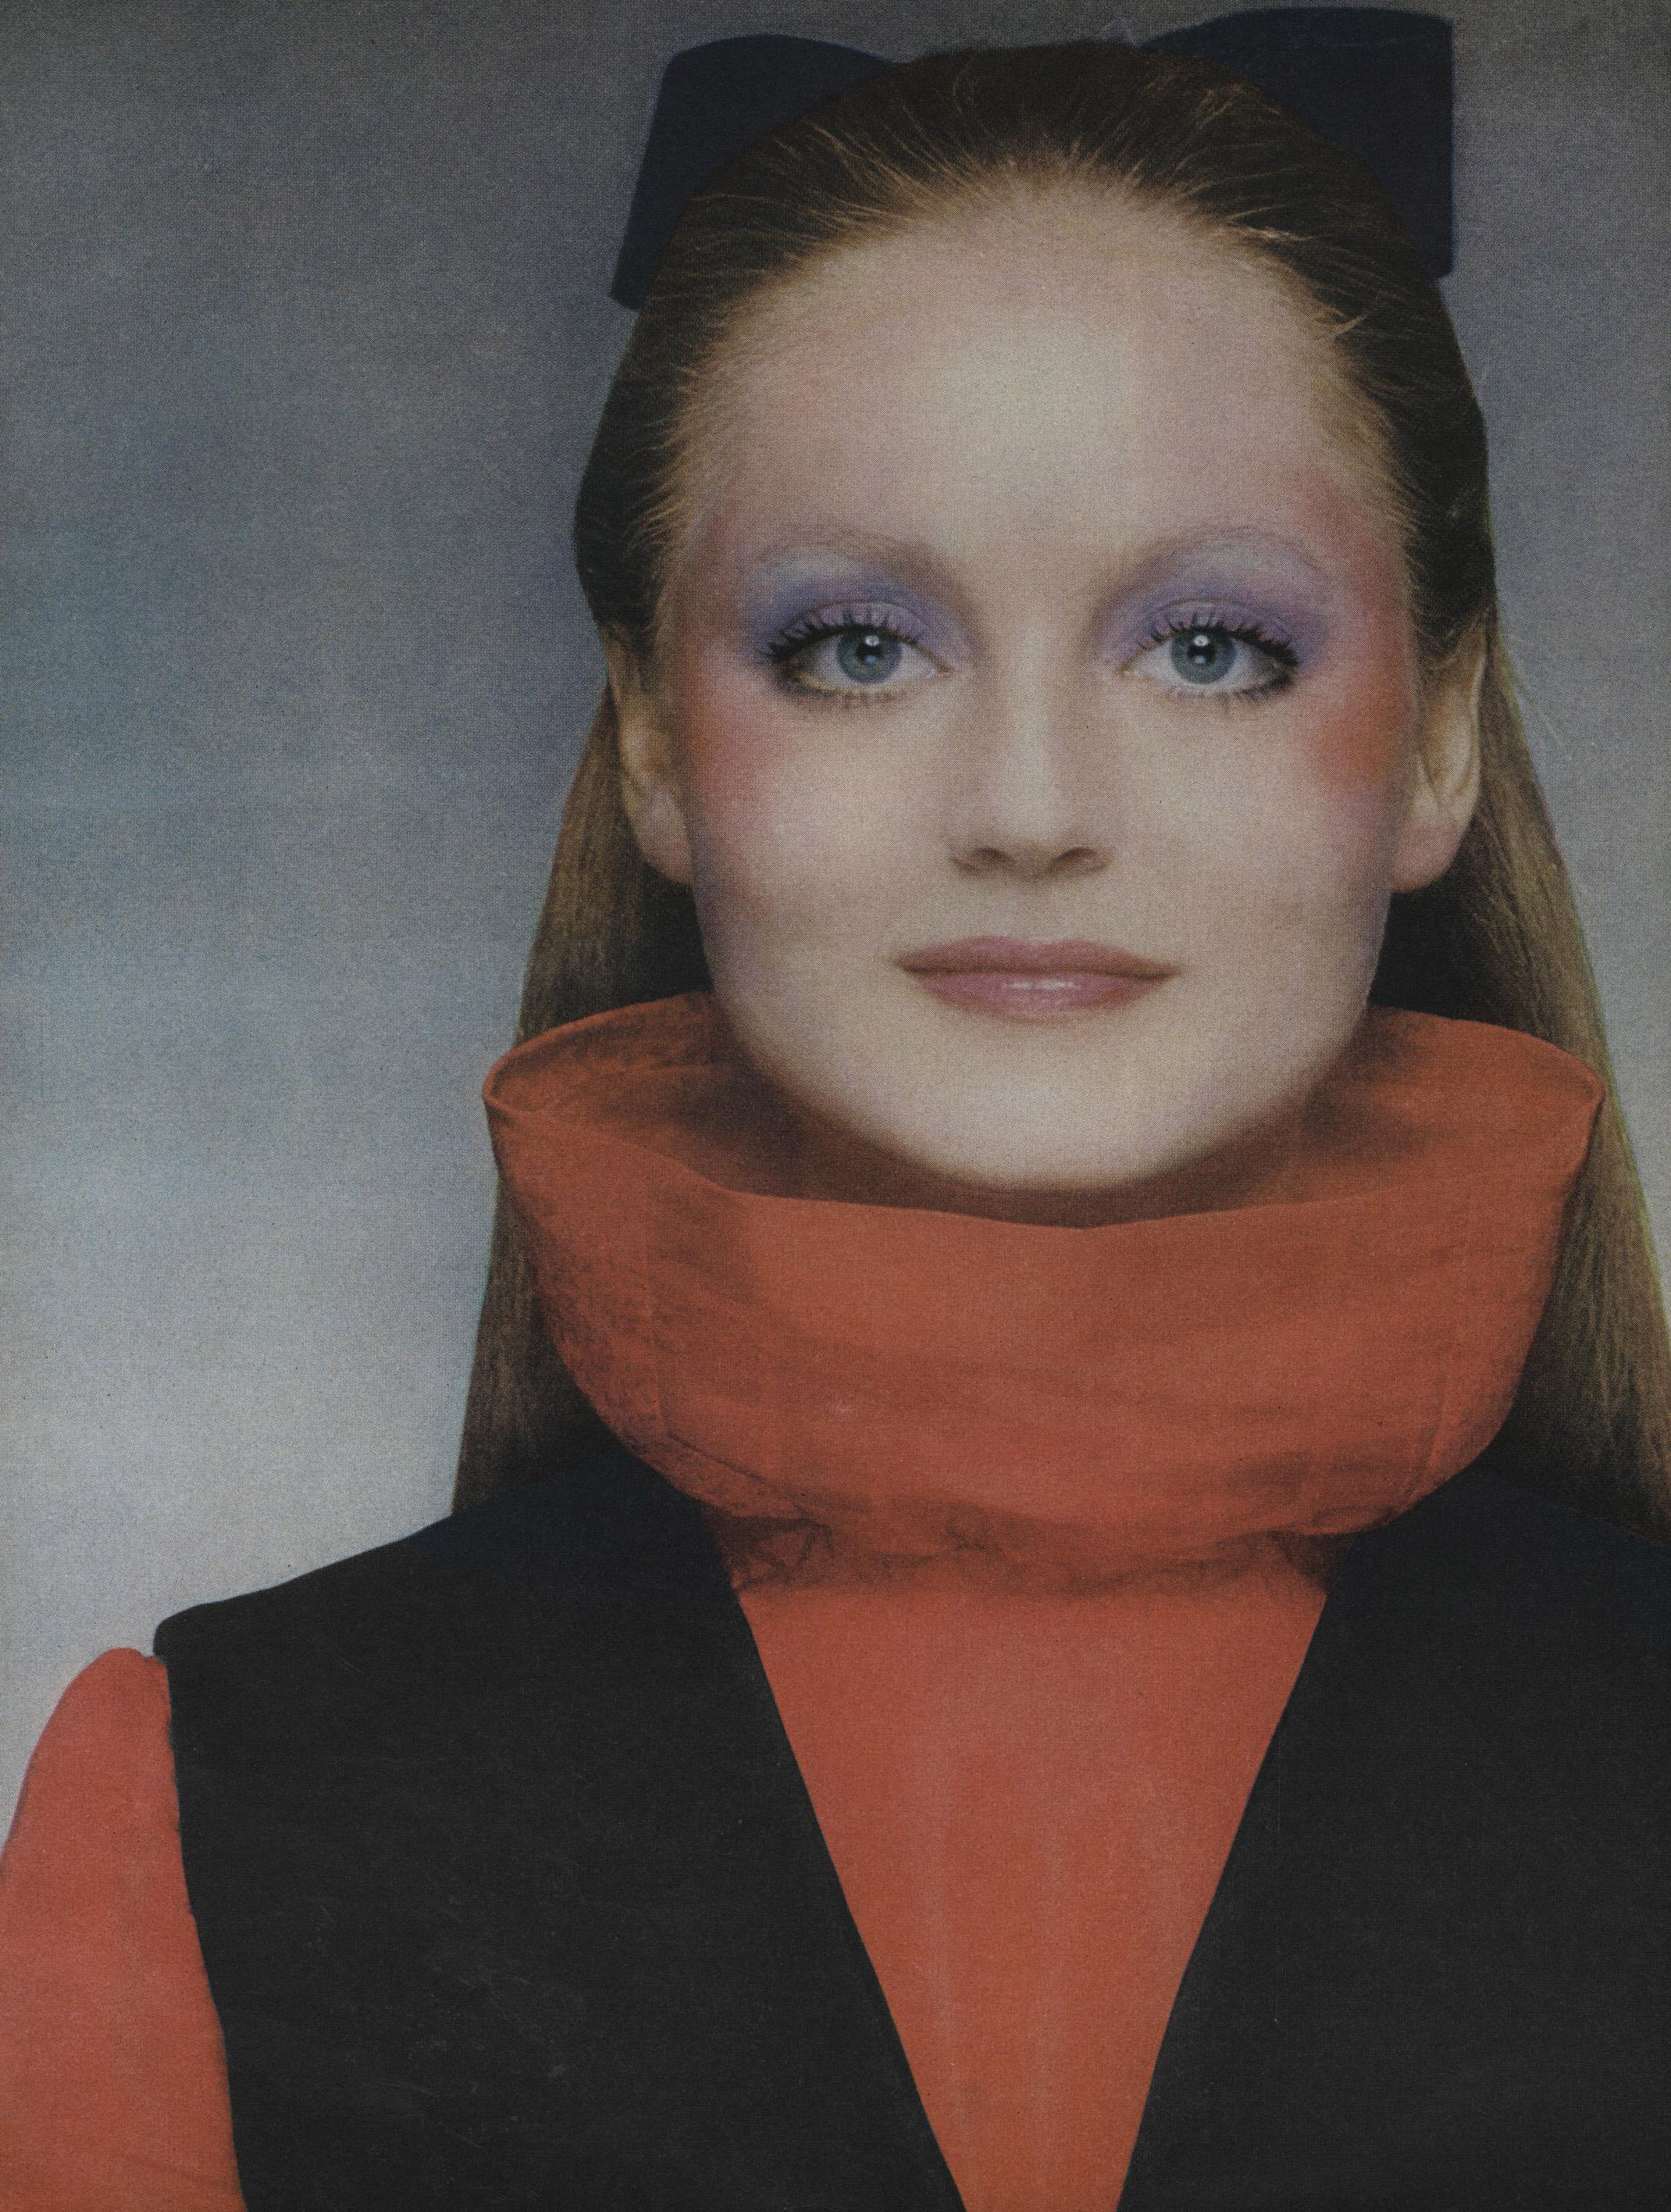 Rainbow eye makeup for Vogue, November 1970. Shot by David Bailey.